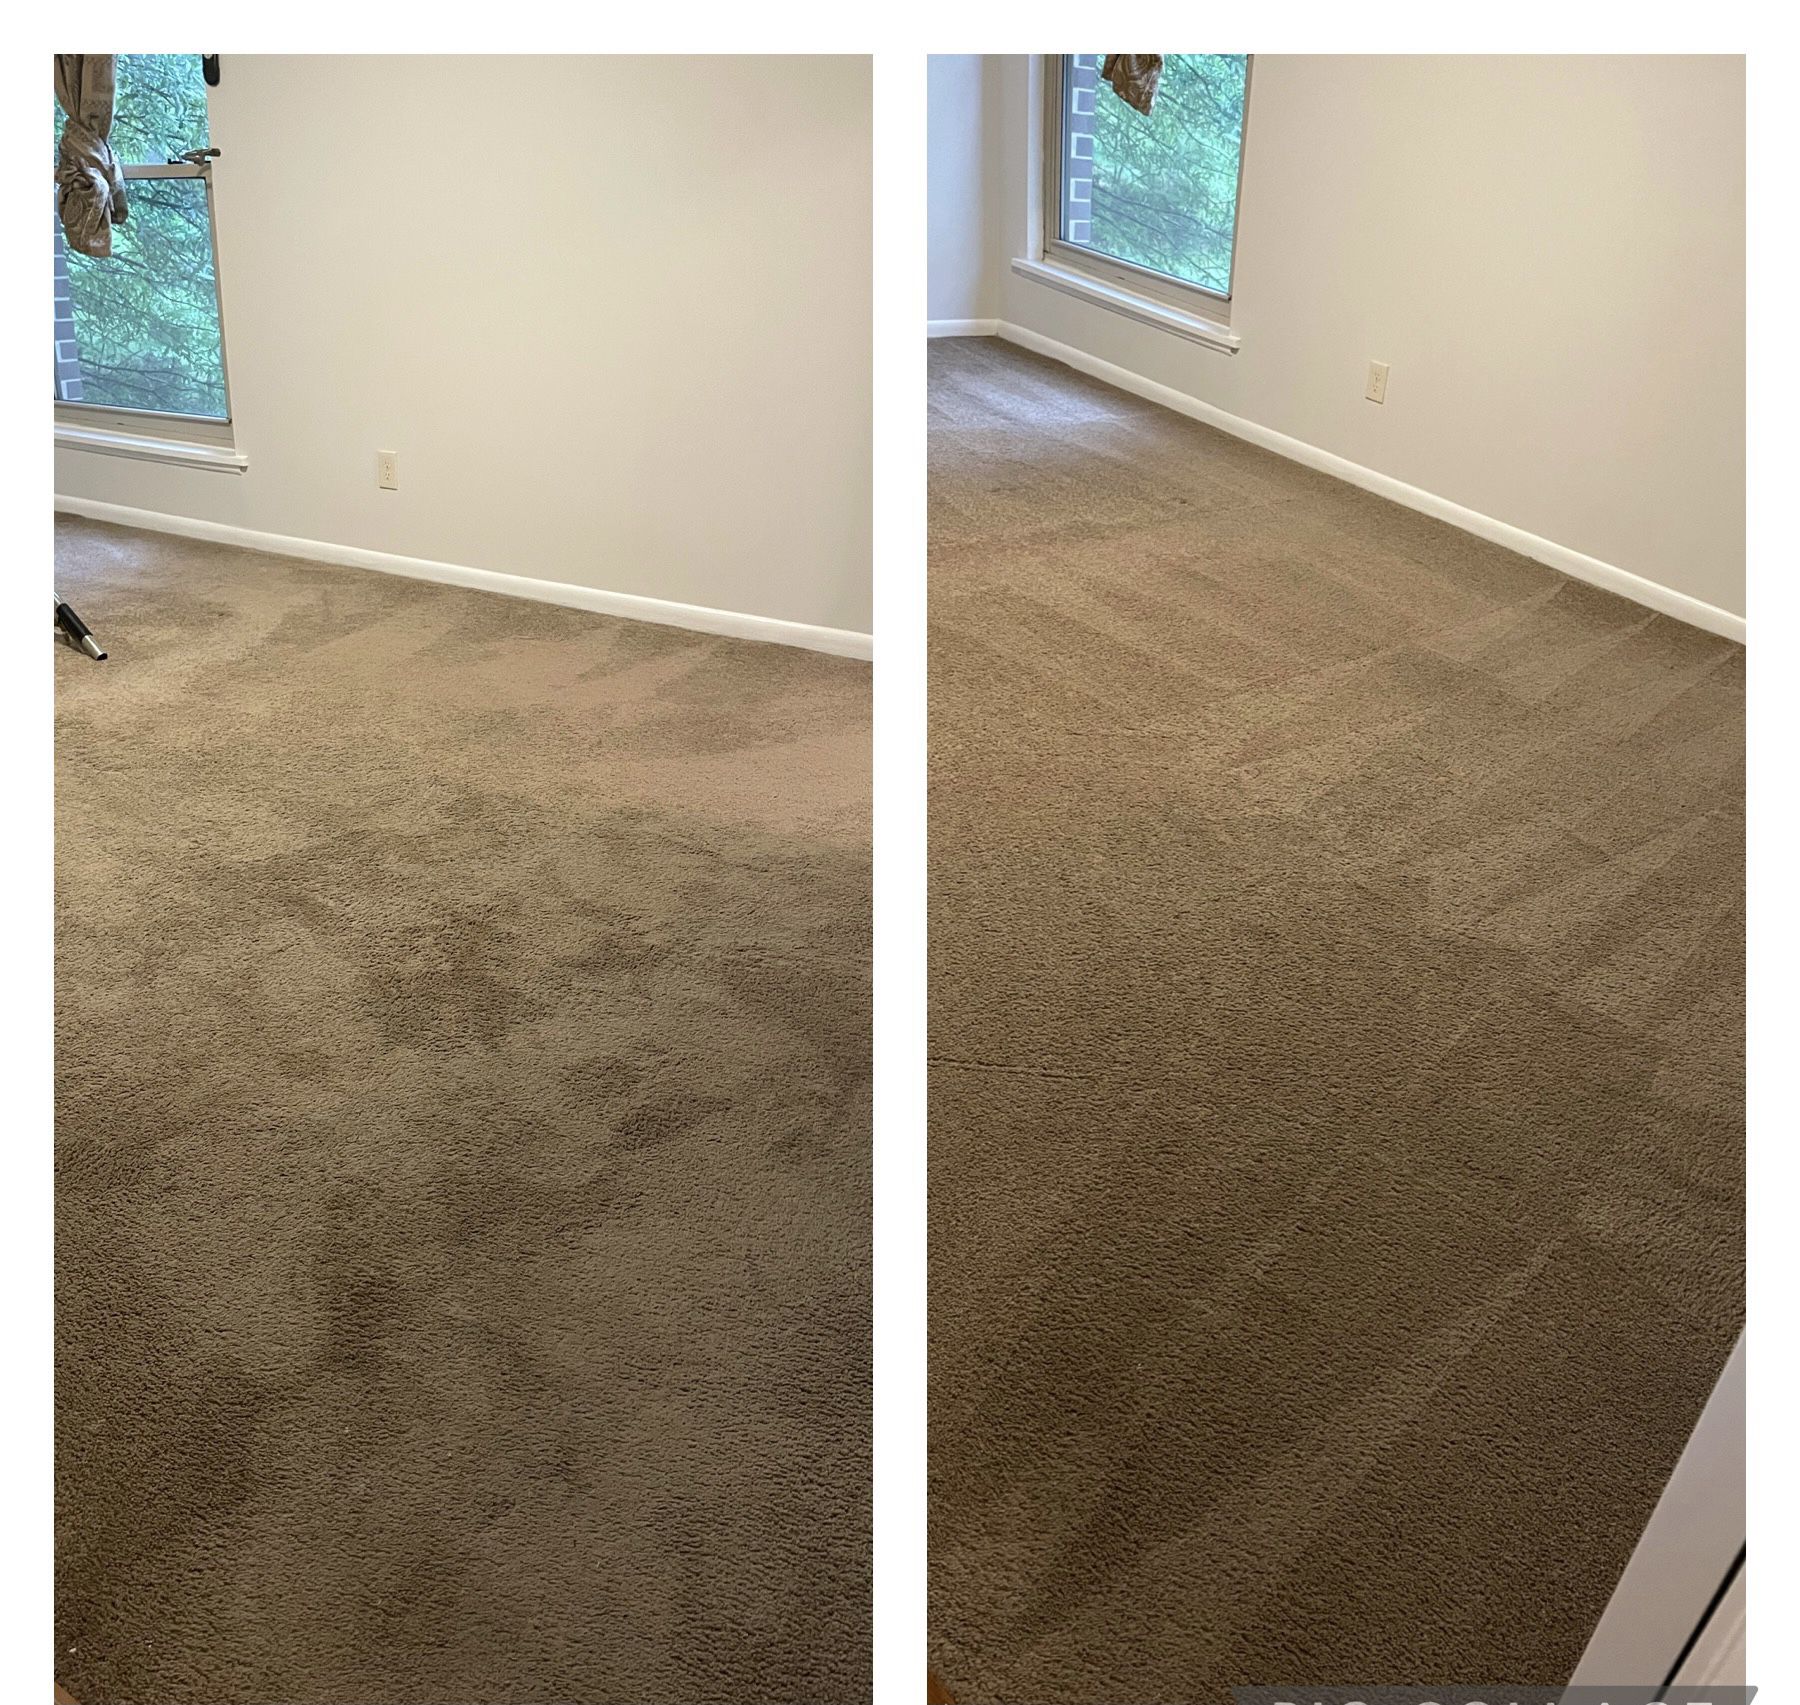 Any Type  Of Carpet Cleaning  Limpieza Carpeta 